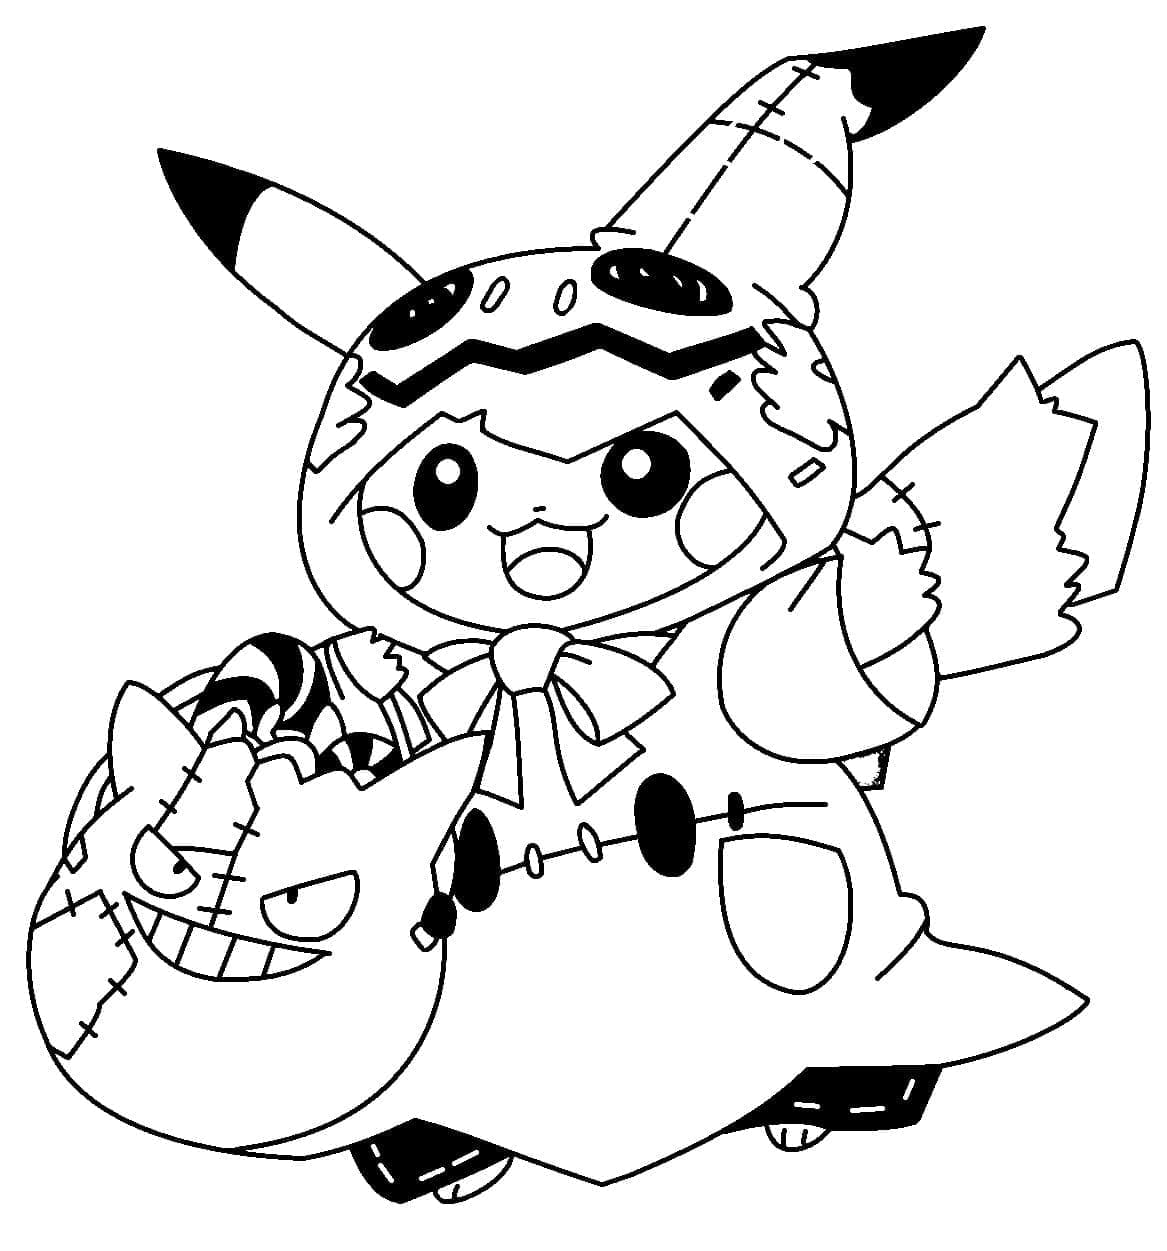 Pokémon Pikachu Halloween coloring page